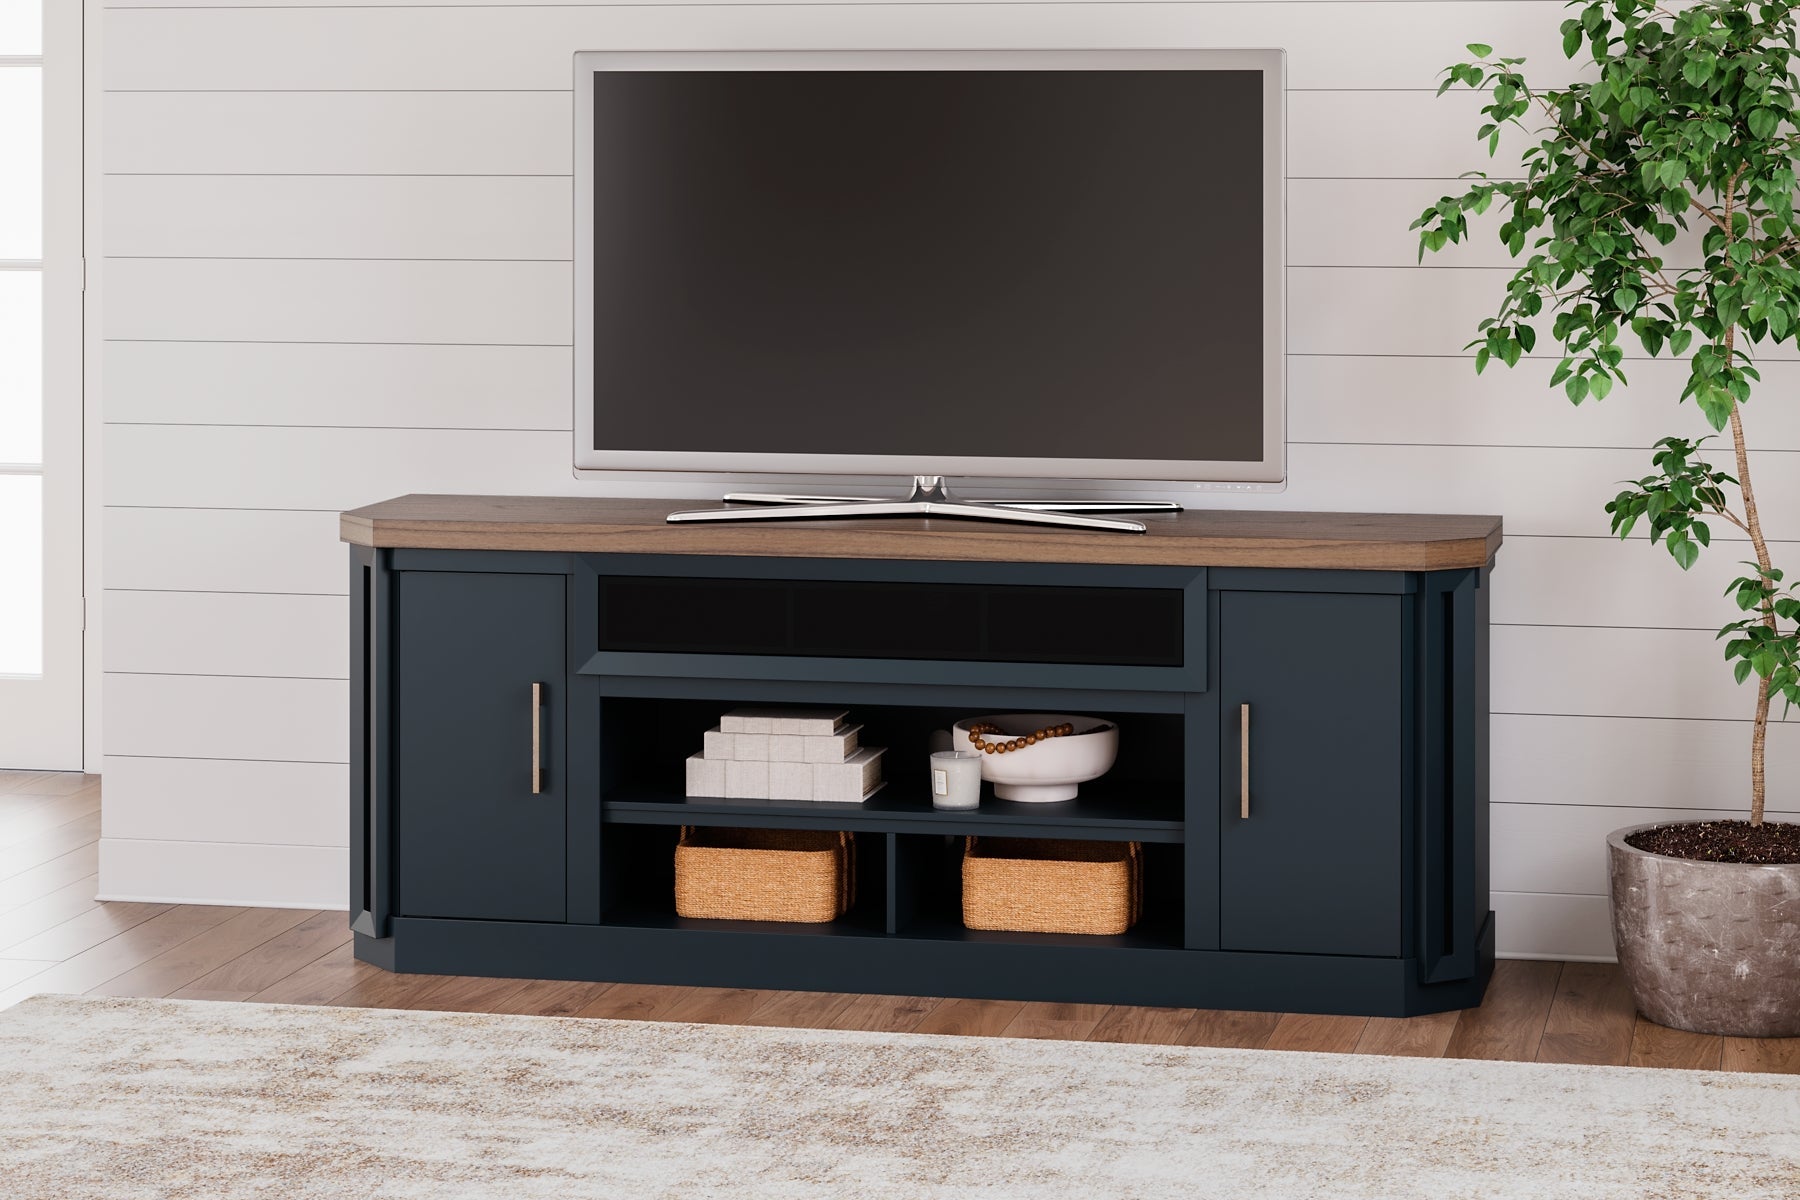 Landocken XL TV Stand w/Fireplace Option at Cloud 9 Mattress & Furniture furniture, home furnishing, home decor